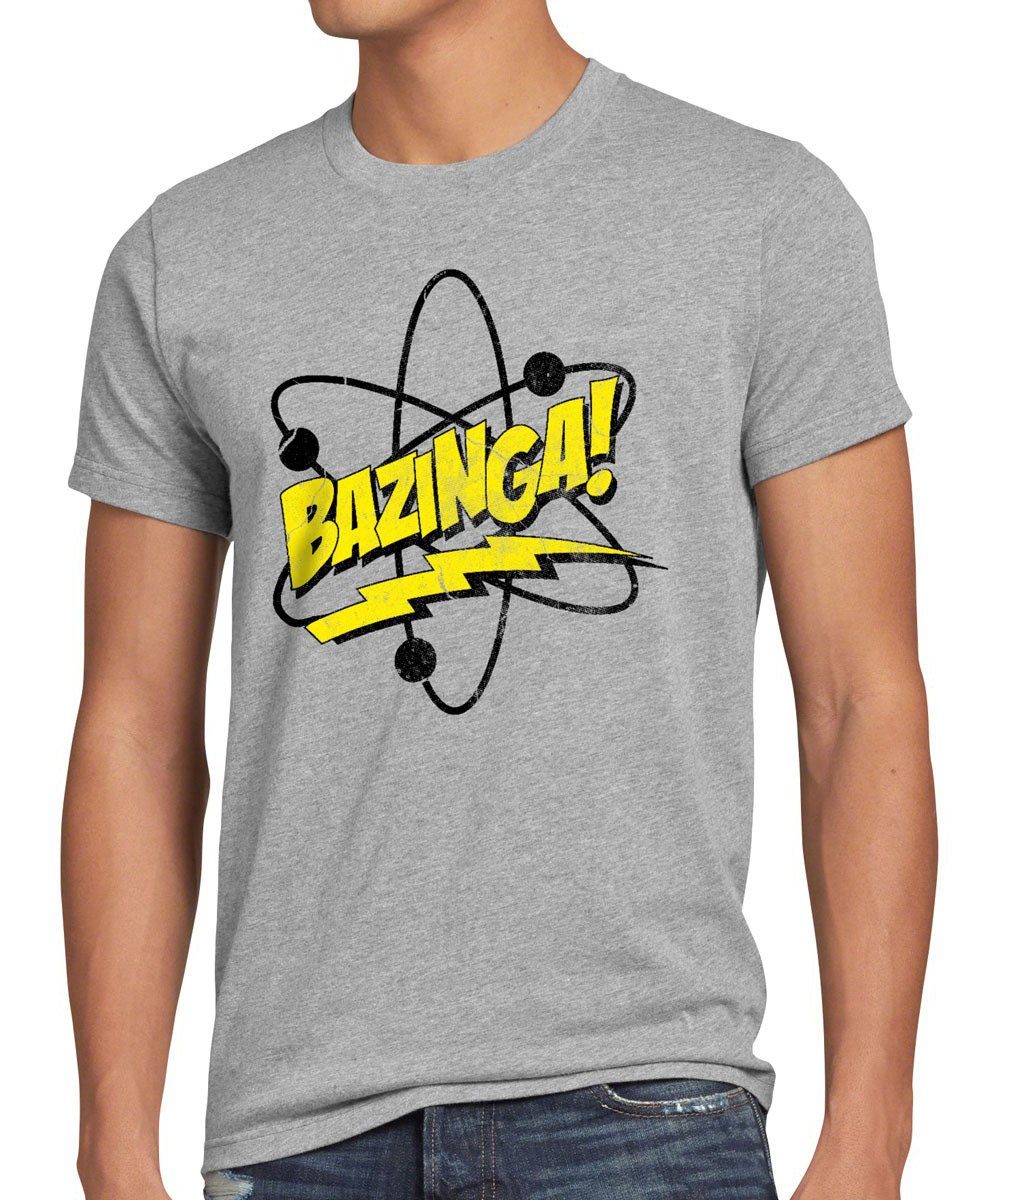 style3 Print-Shirt Herren T-Shirt Bazinga Sheldon big bang fan atom cooper leonard theory physik the grau meliert